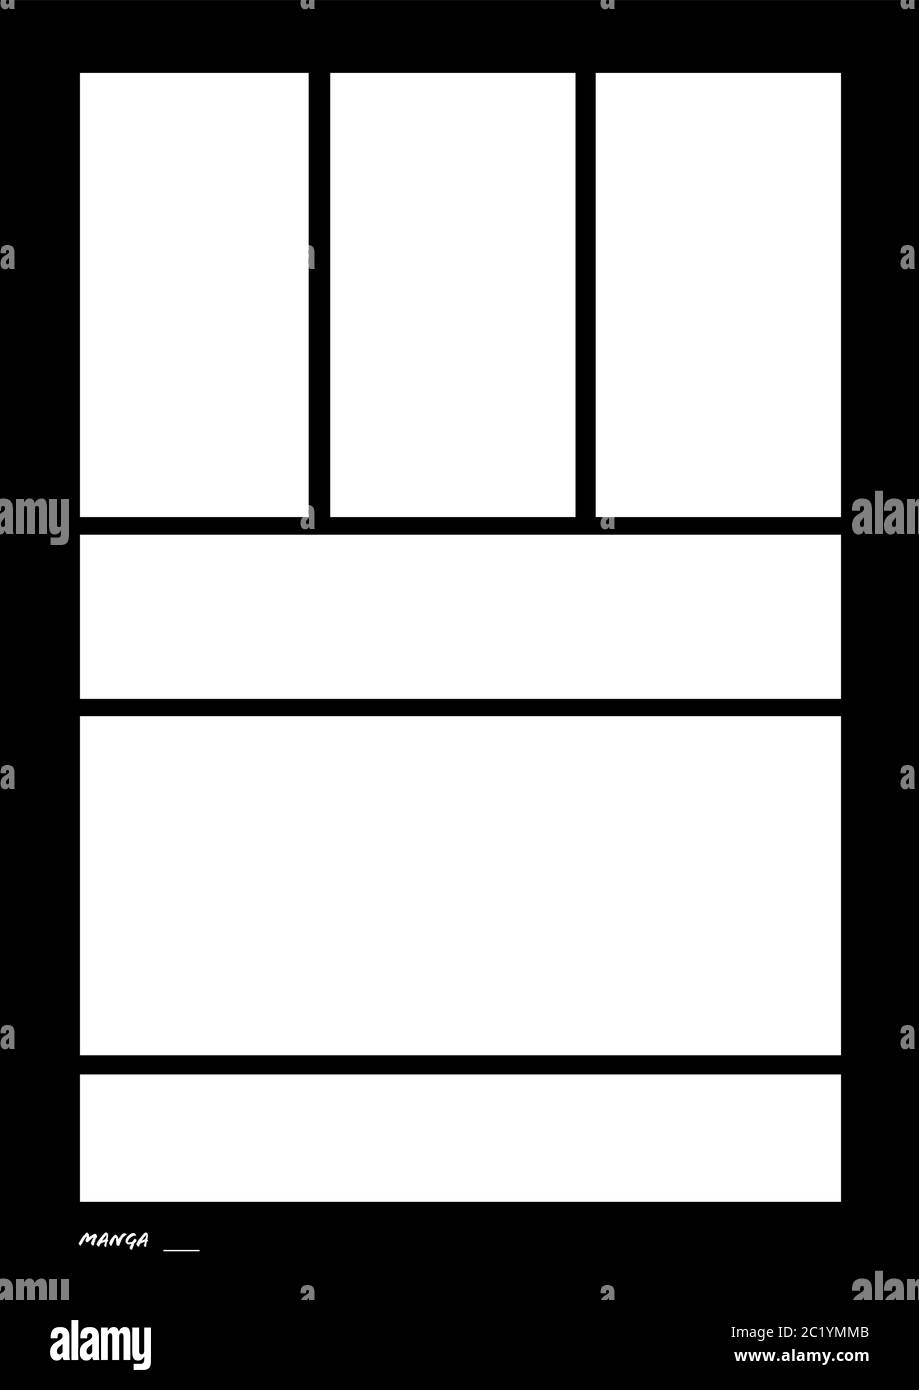 manga-storyboard-layout-comic-book-template-black-stock-vector-image